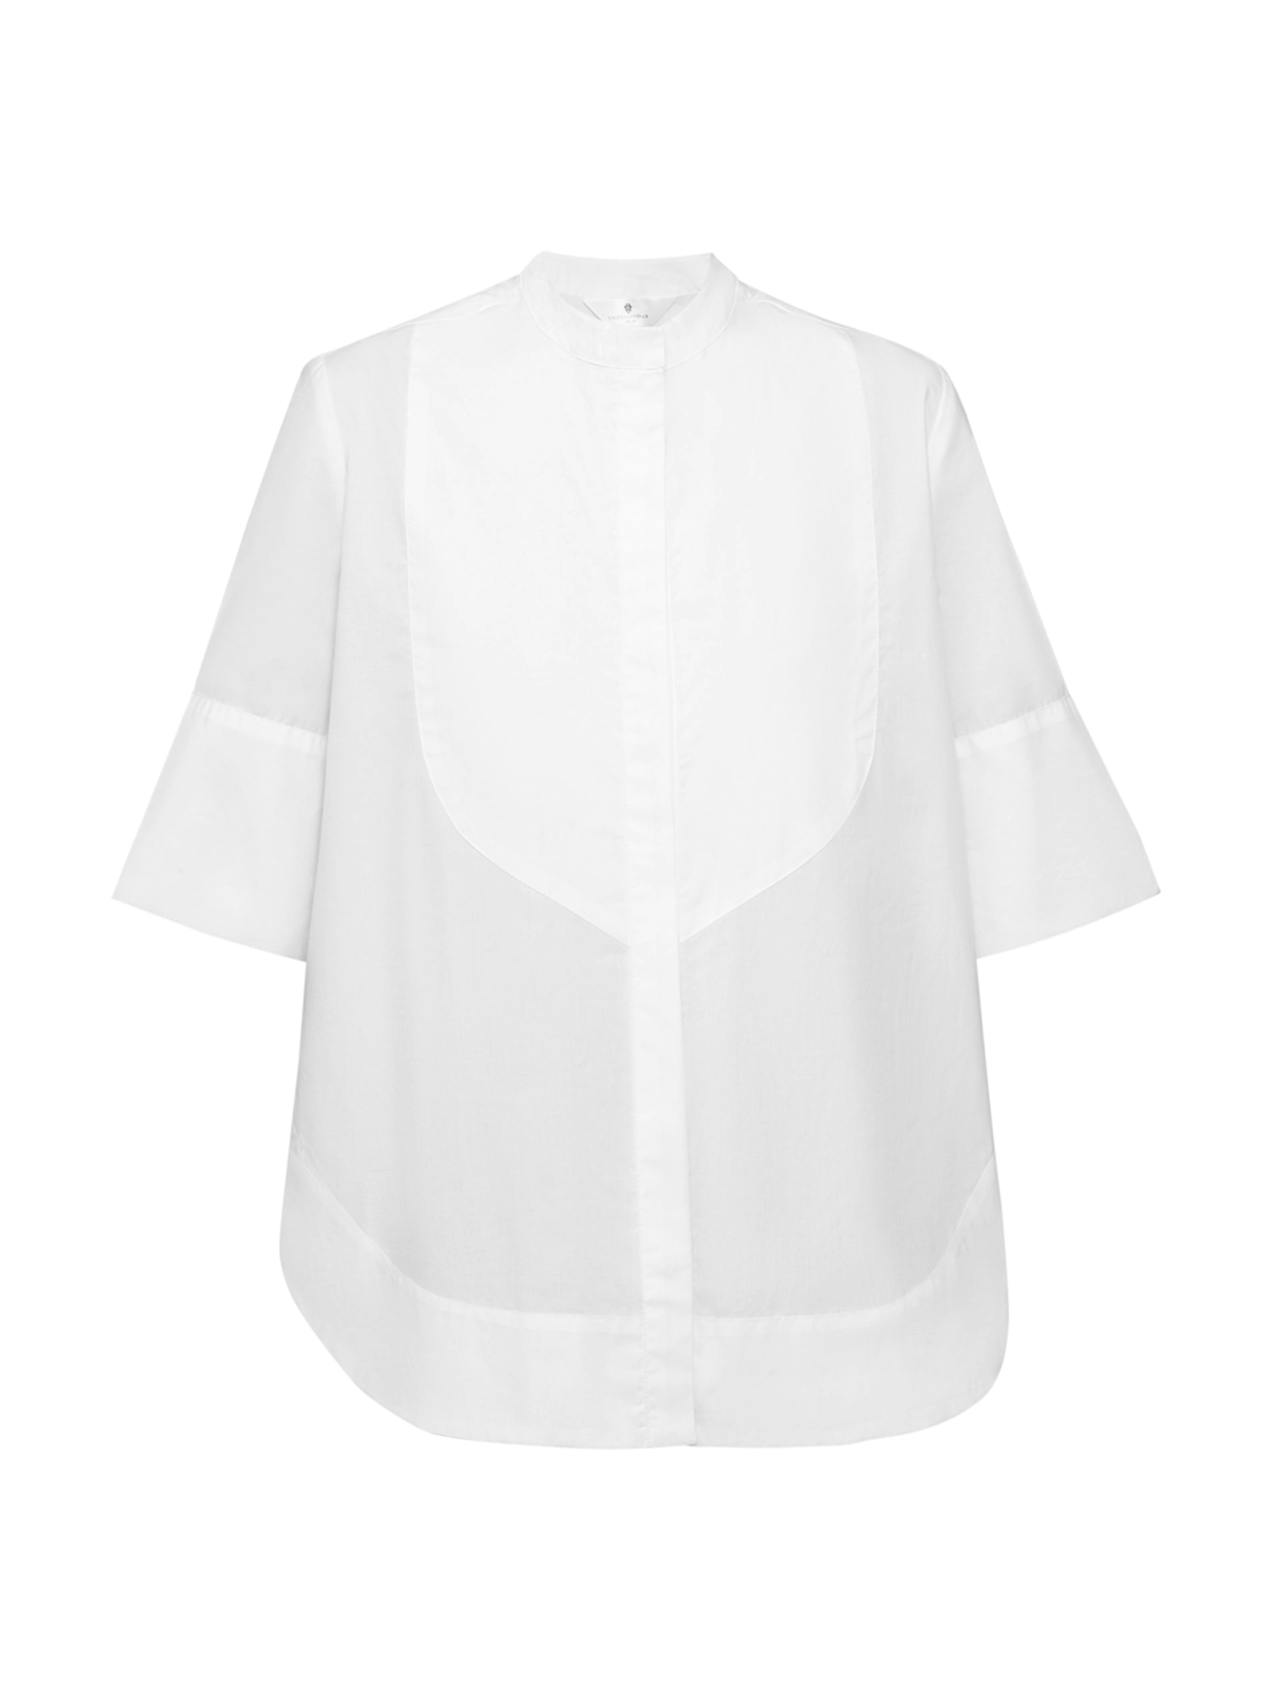 White cotton poplin tuxedo shirt